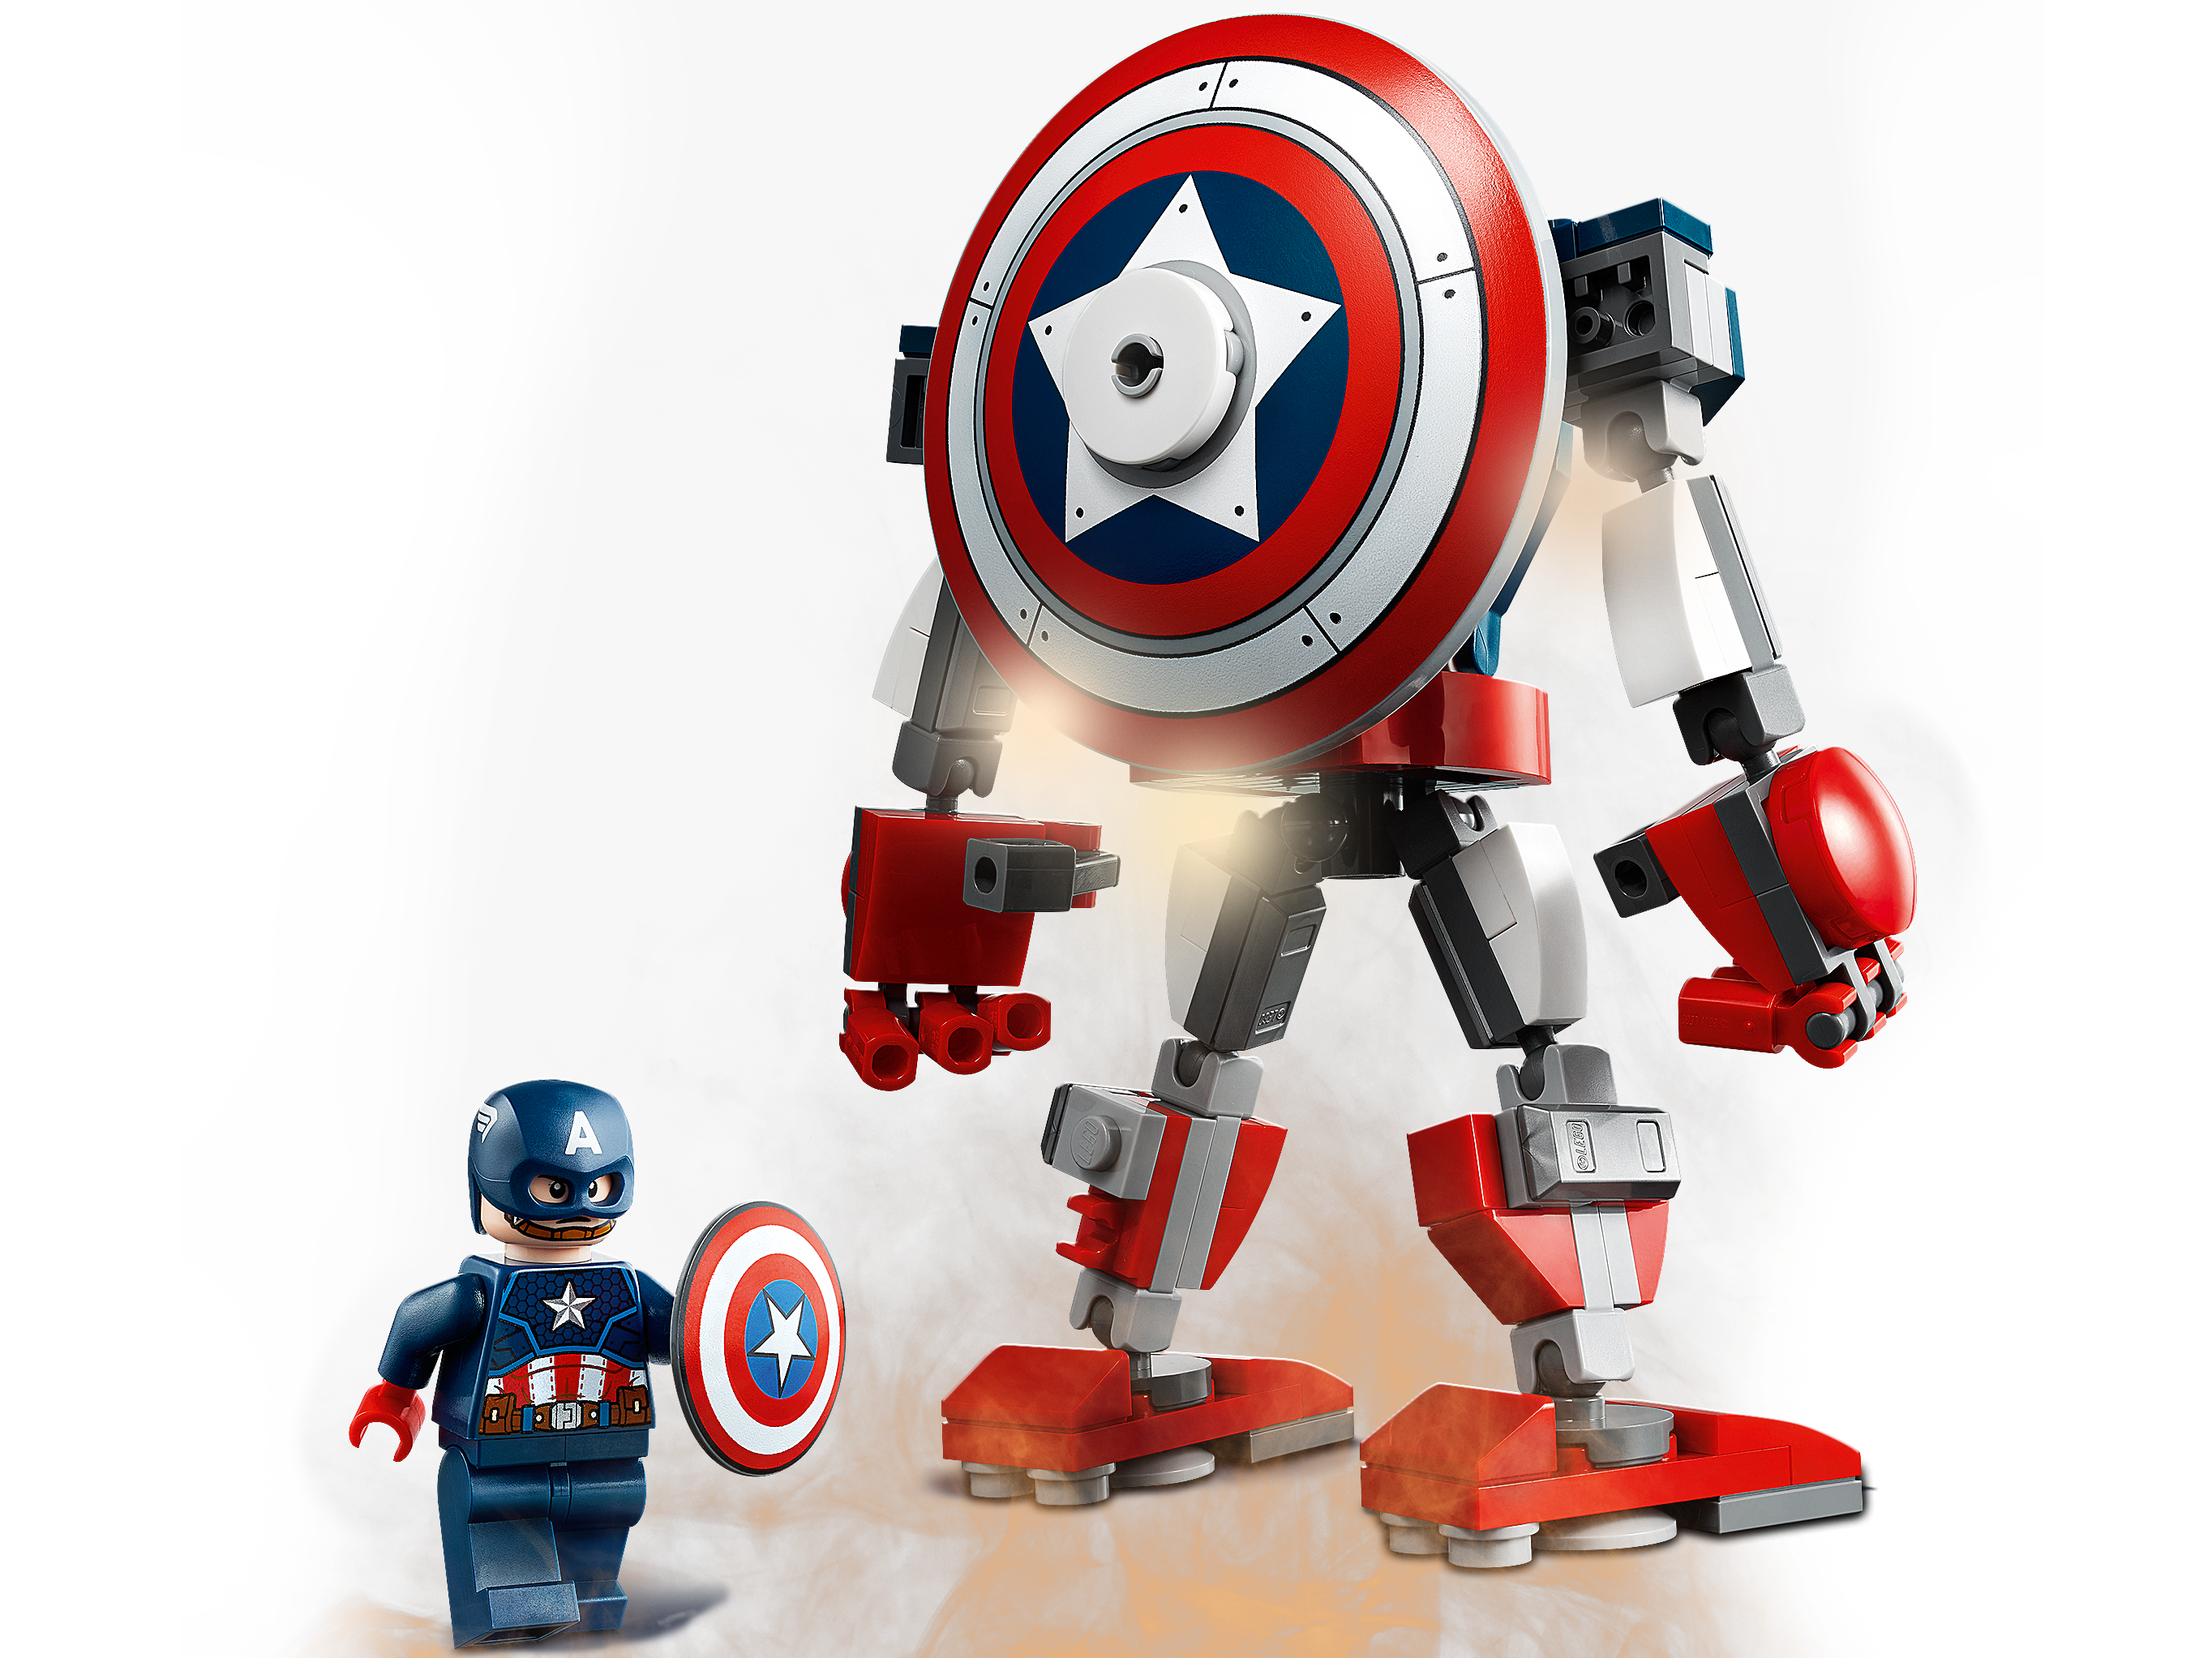 LEGO Marvel Avengers Captain America Mech Armor 76168 Building Toy New NIB